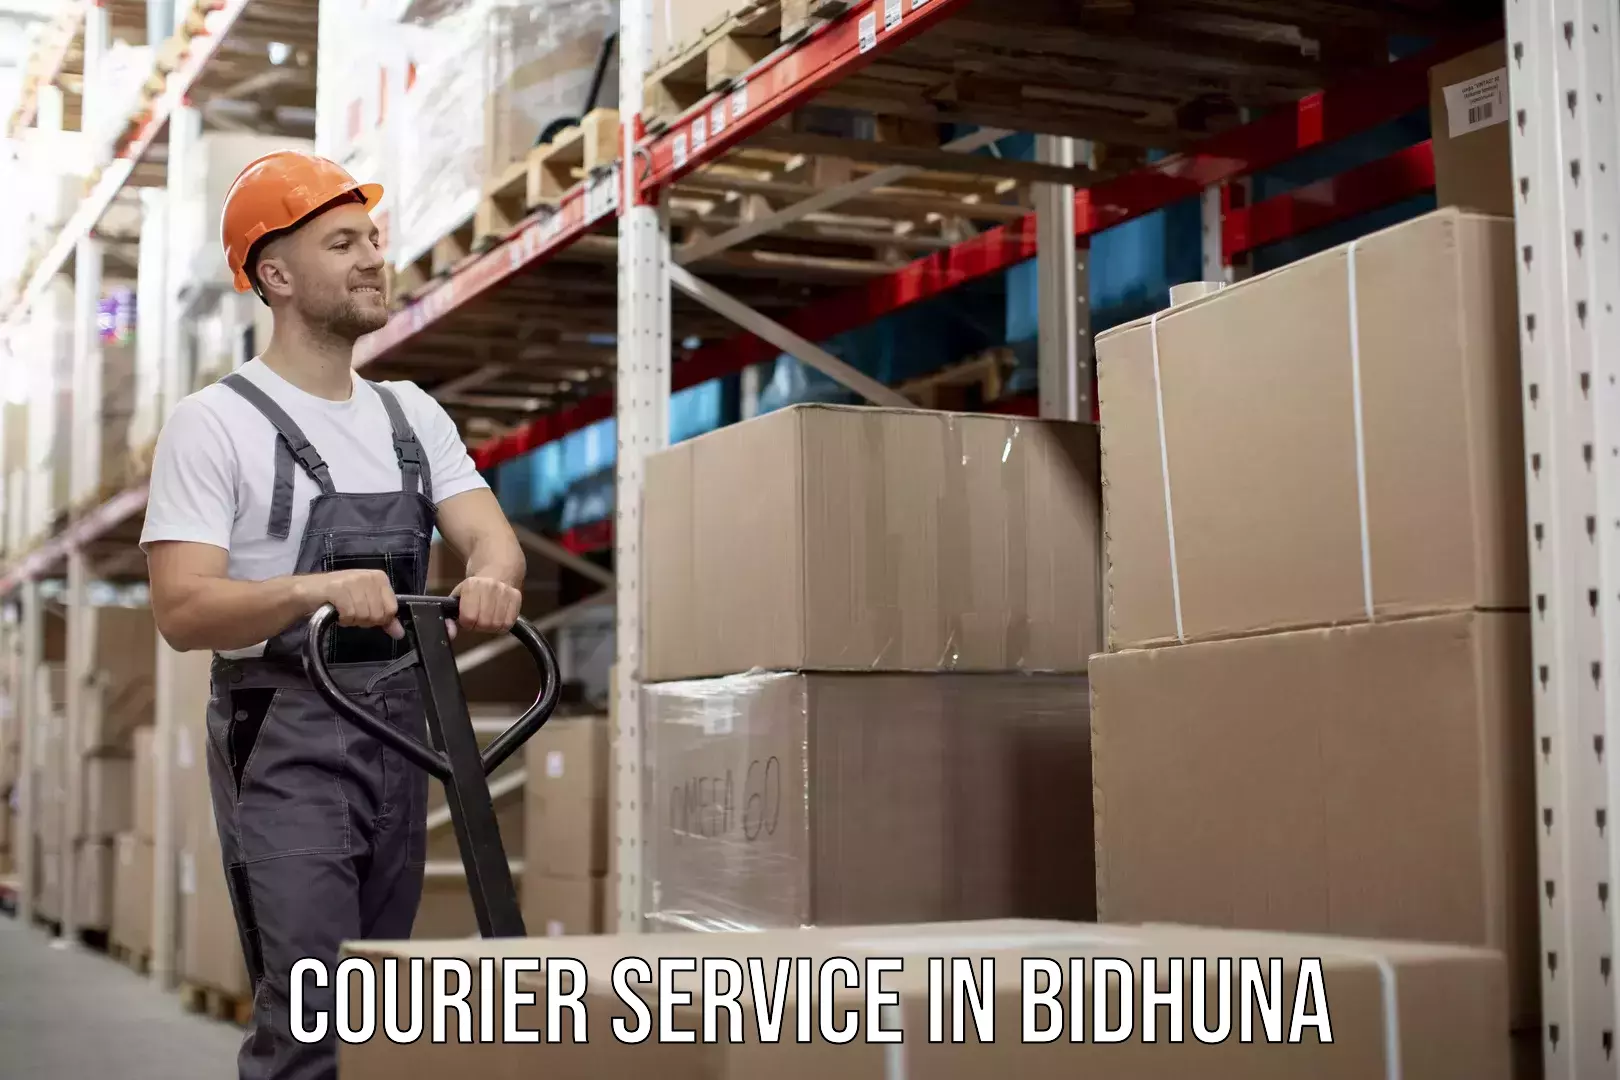 Cargo delivery service in Bidhuna